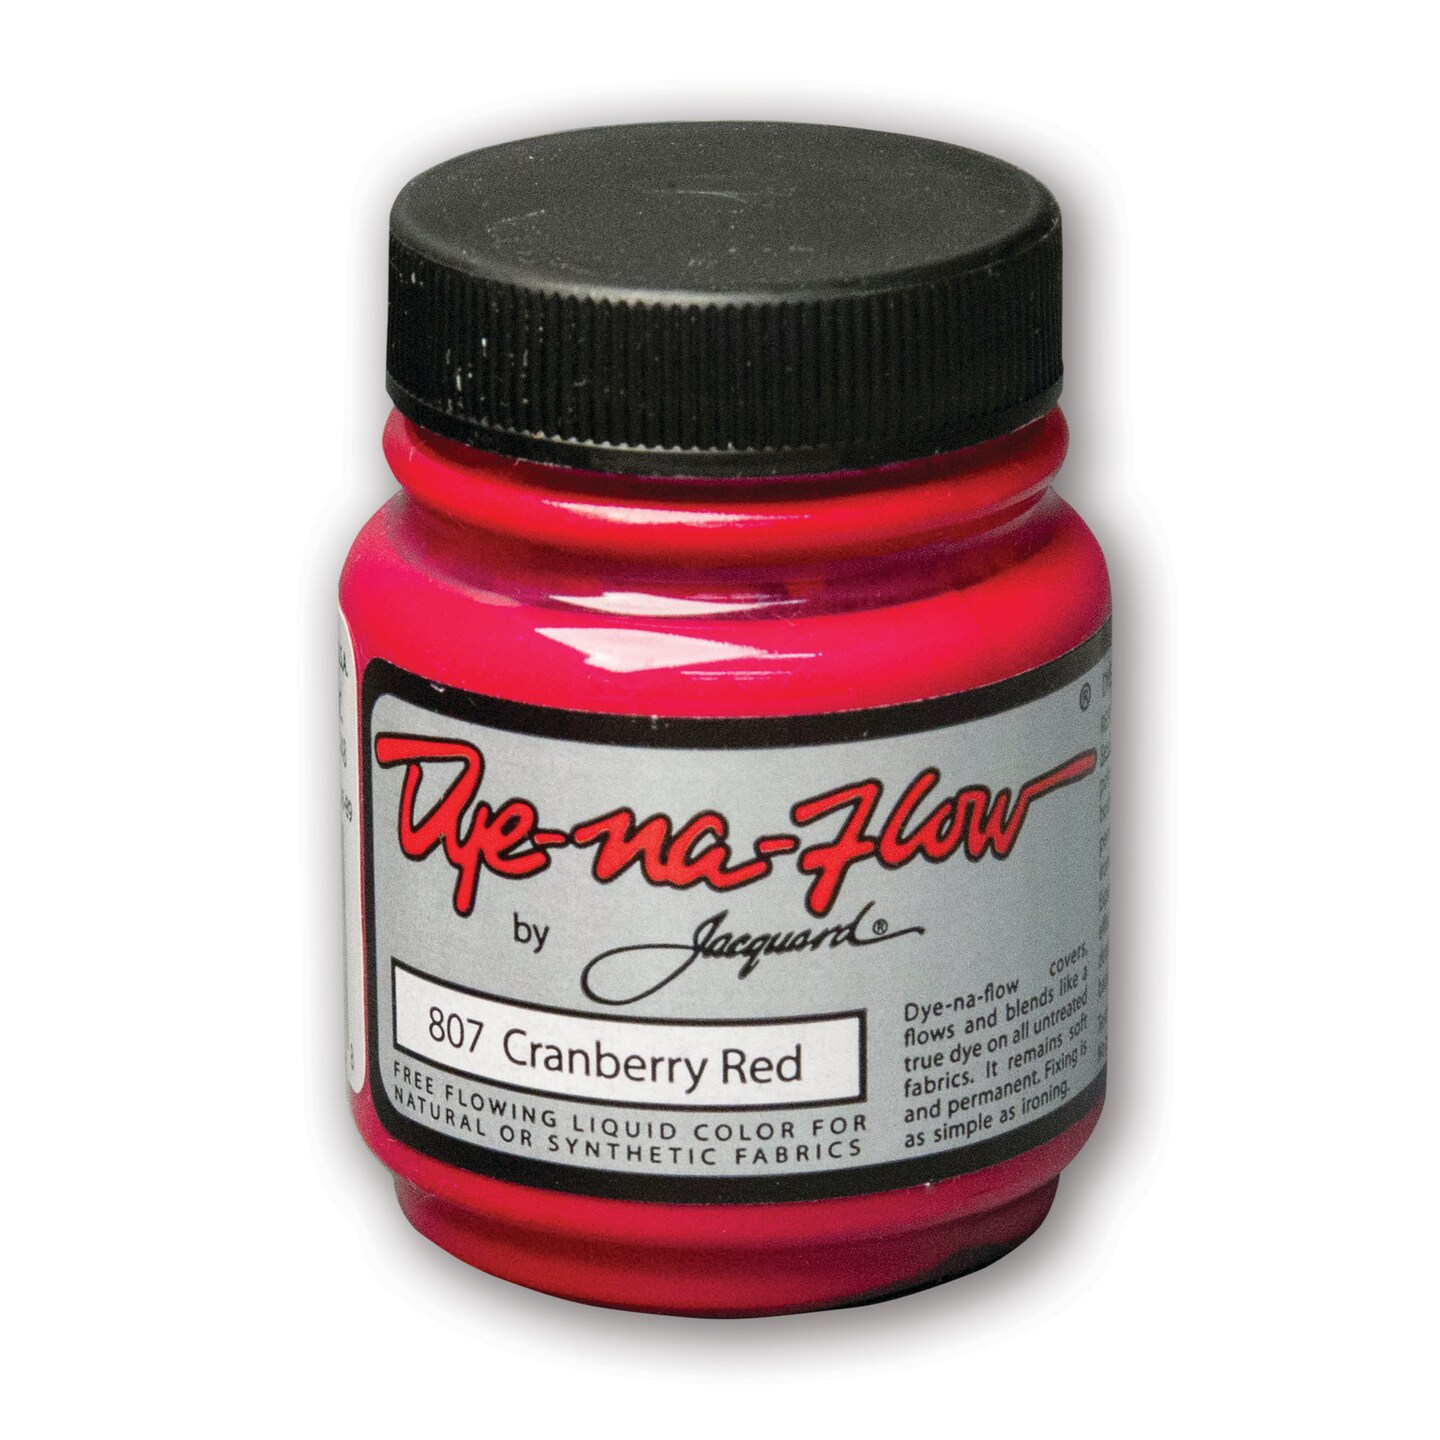 Jacquard Dye-Na-Flow Color, 2.25 oz., Cranberry Red